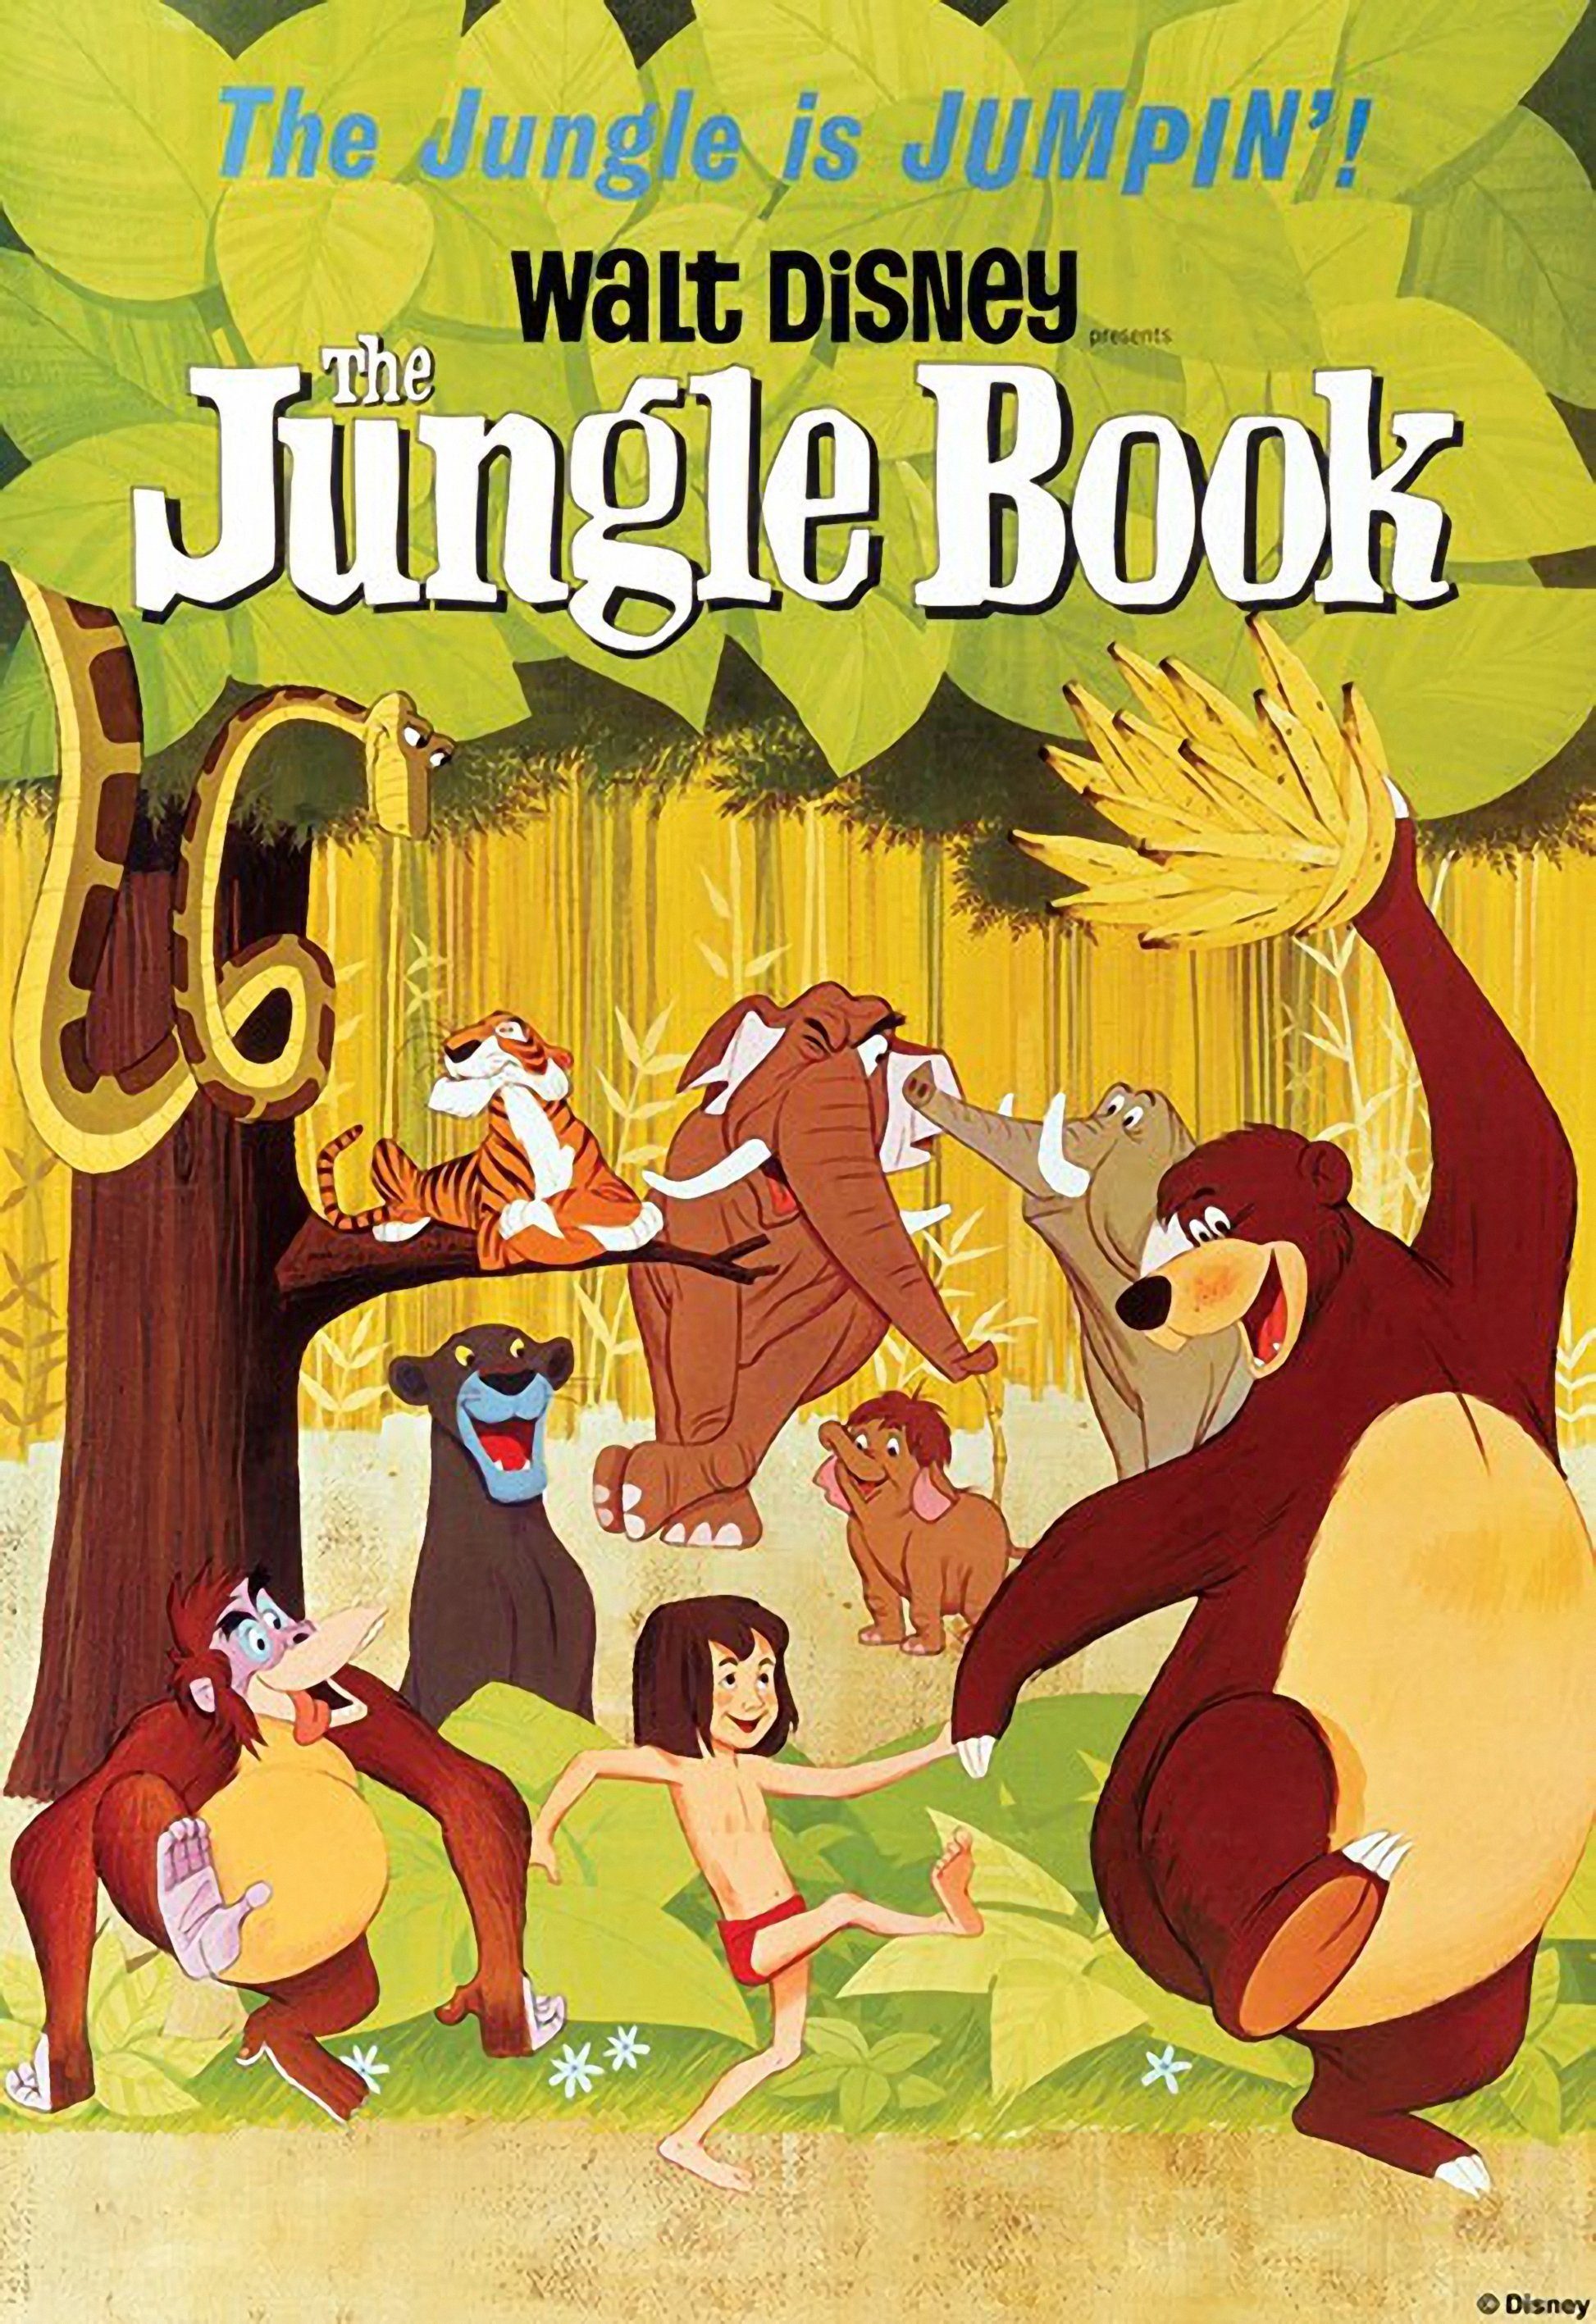 Leinwandbild home for Art Book, the Jungle Disney